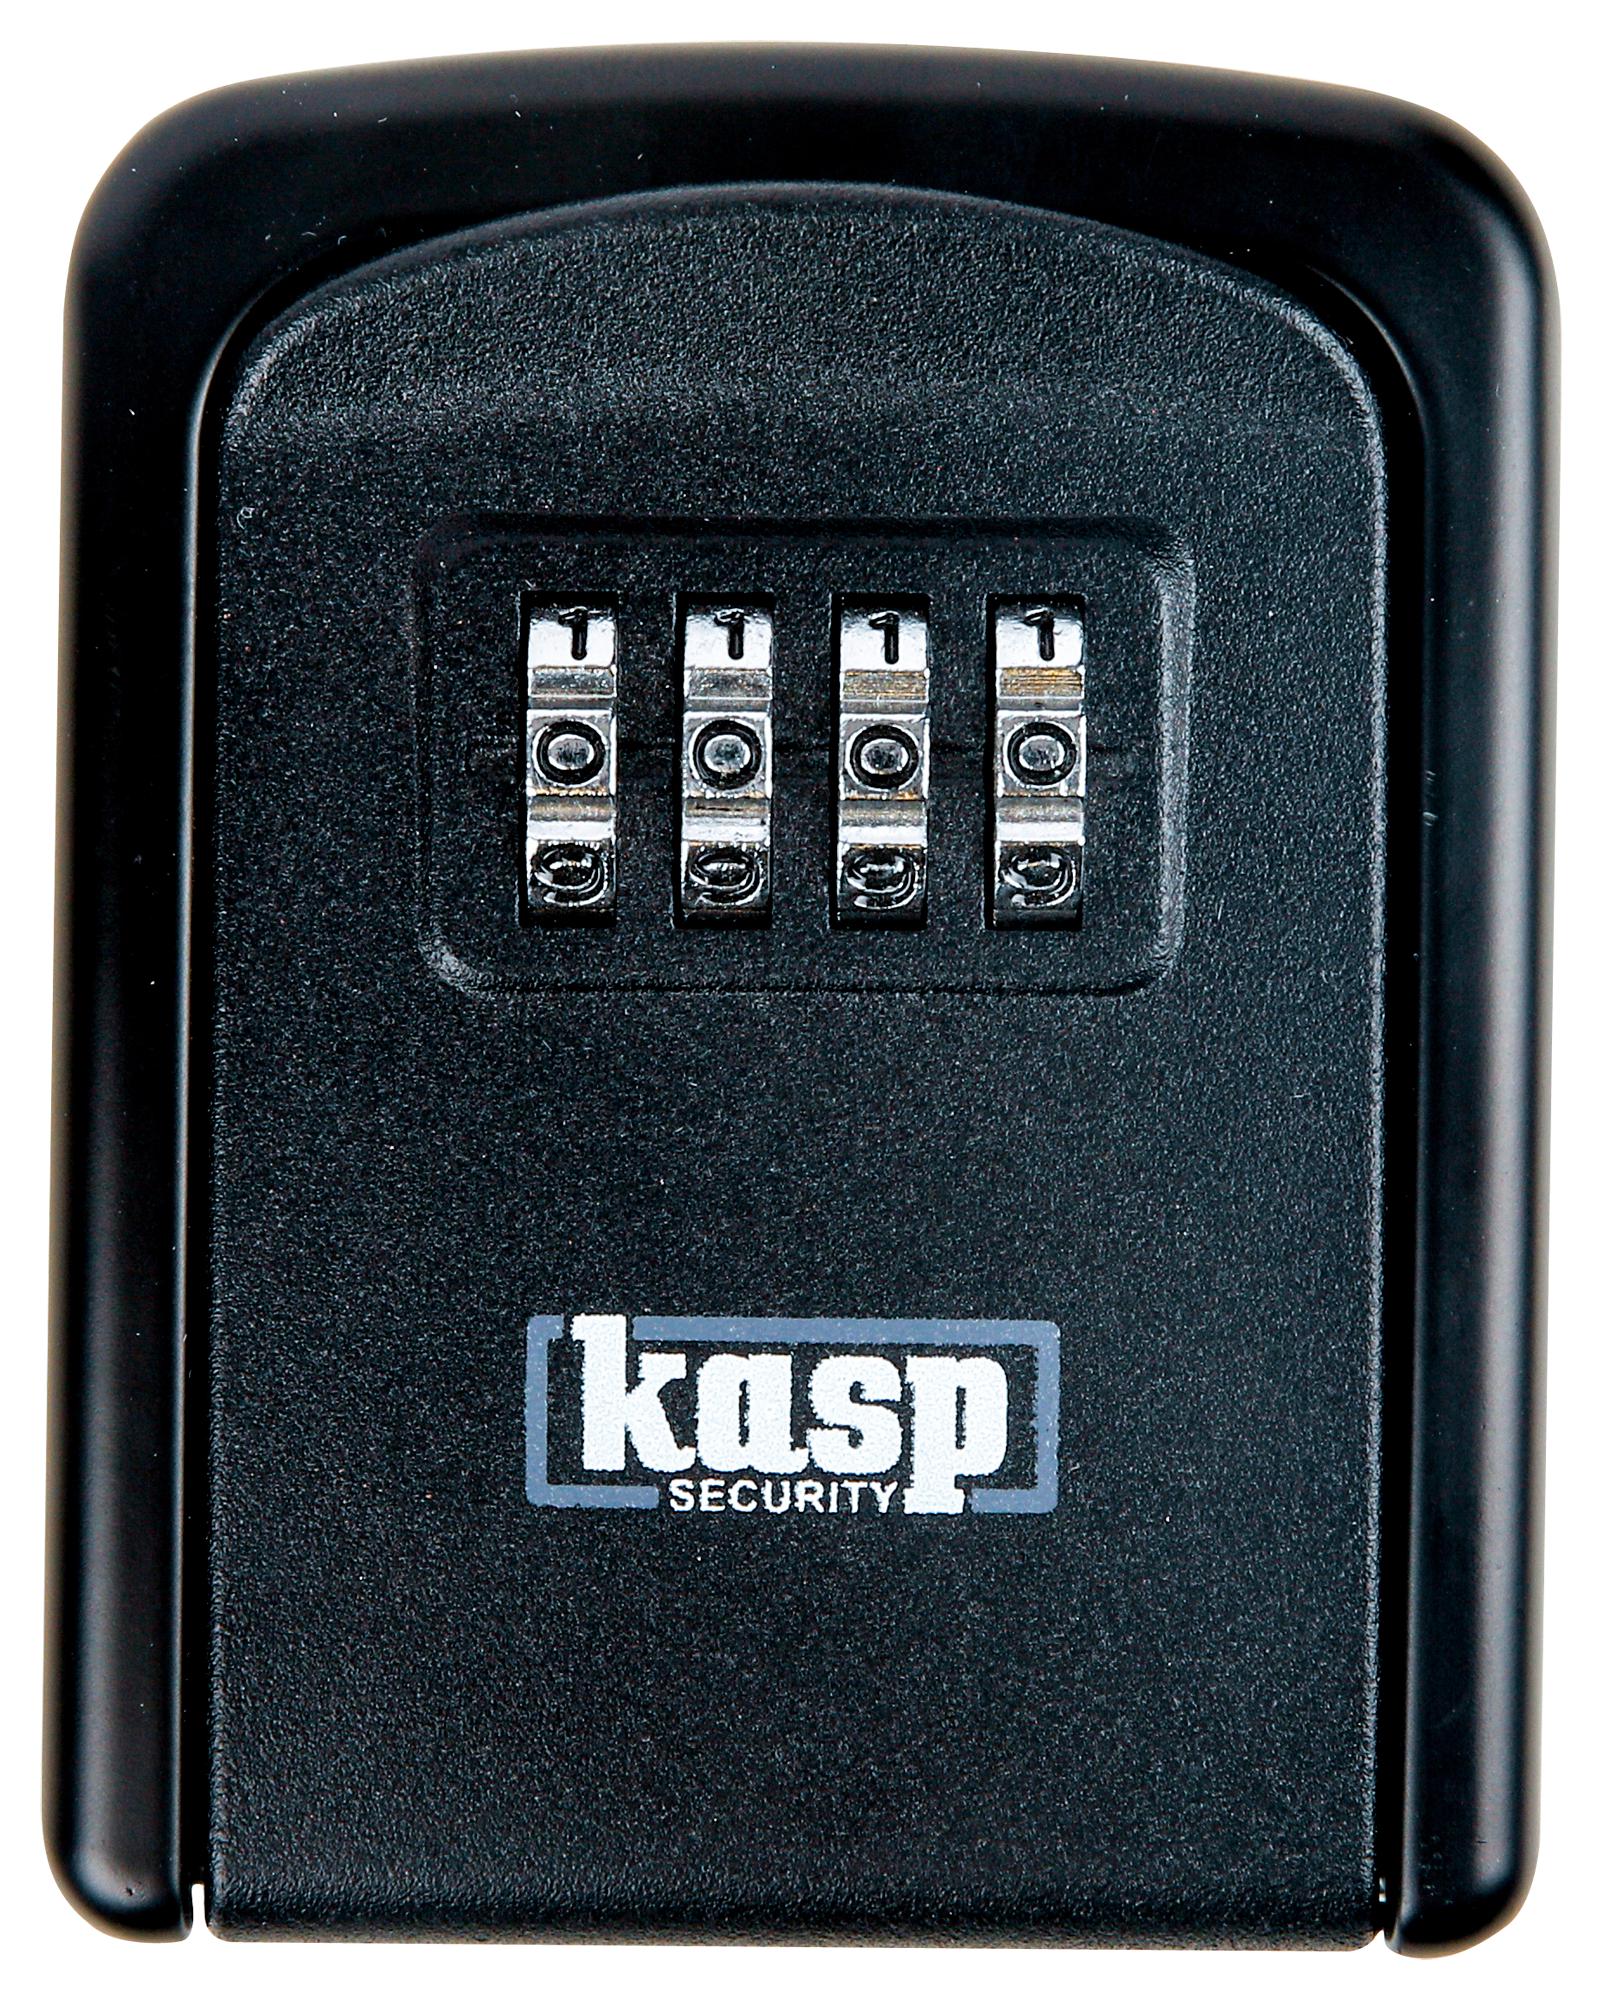 K60175D COMBINATION KEY SAFE COMPACT, 75MM KASP SECURITY